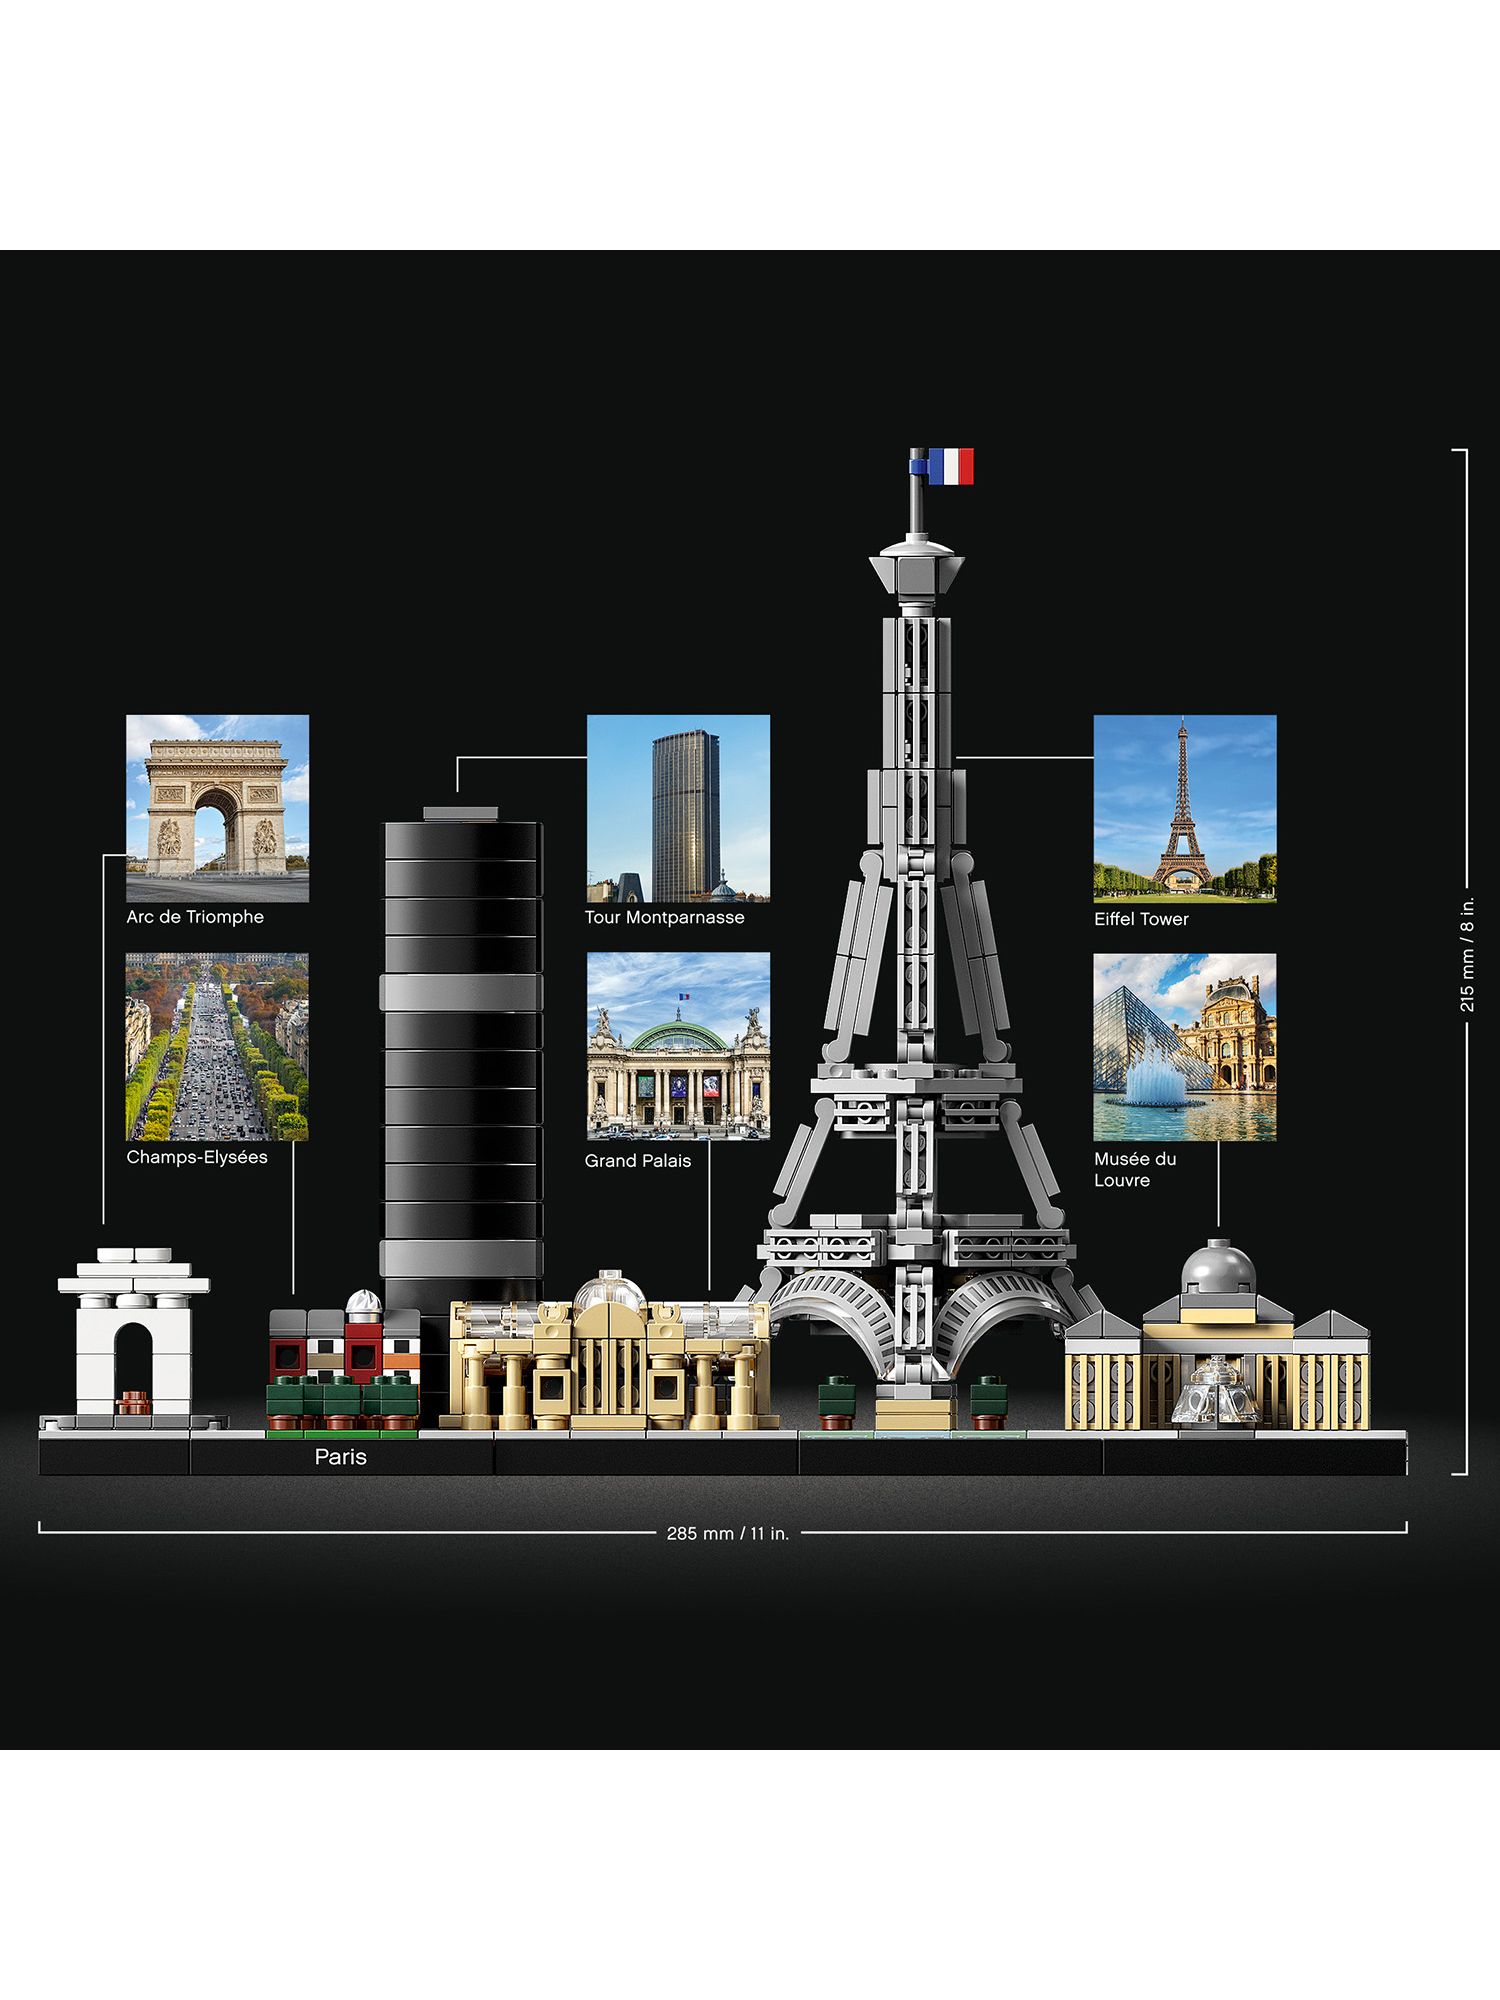 Google Paris Has An Eiffel Tower Made Of LEGO